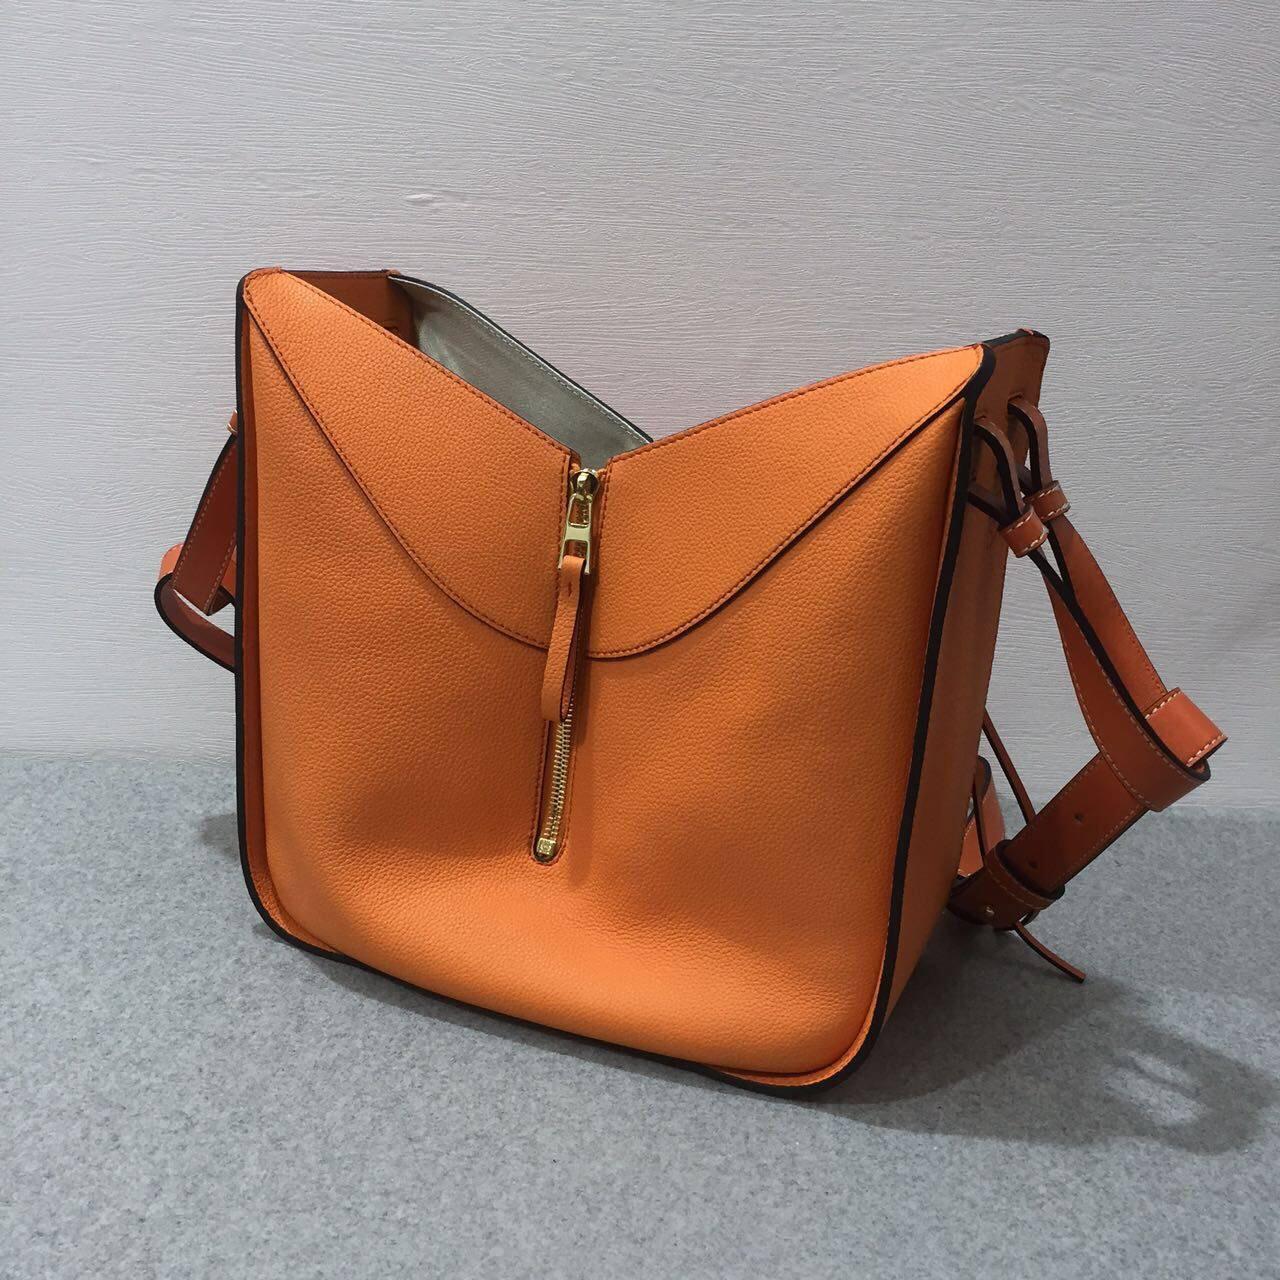 Loewe羅意威 Hammock Small Bag Apricot/Orange 吊床包